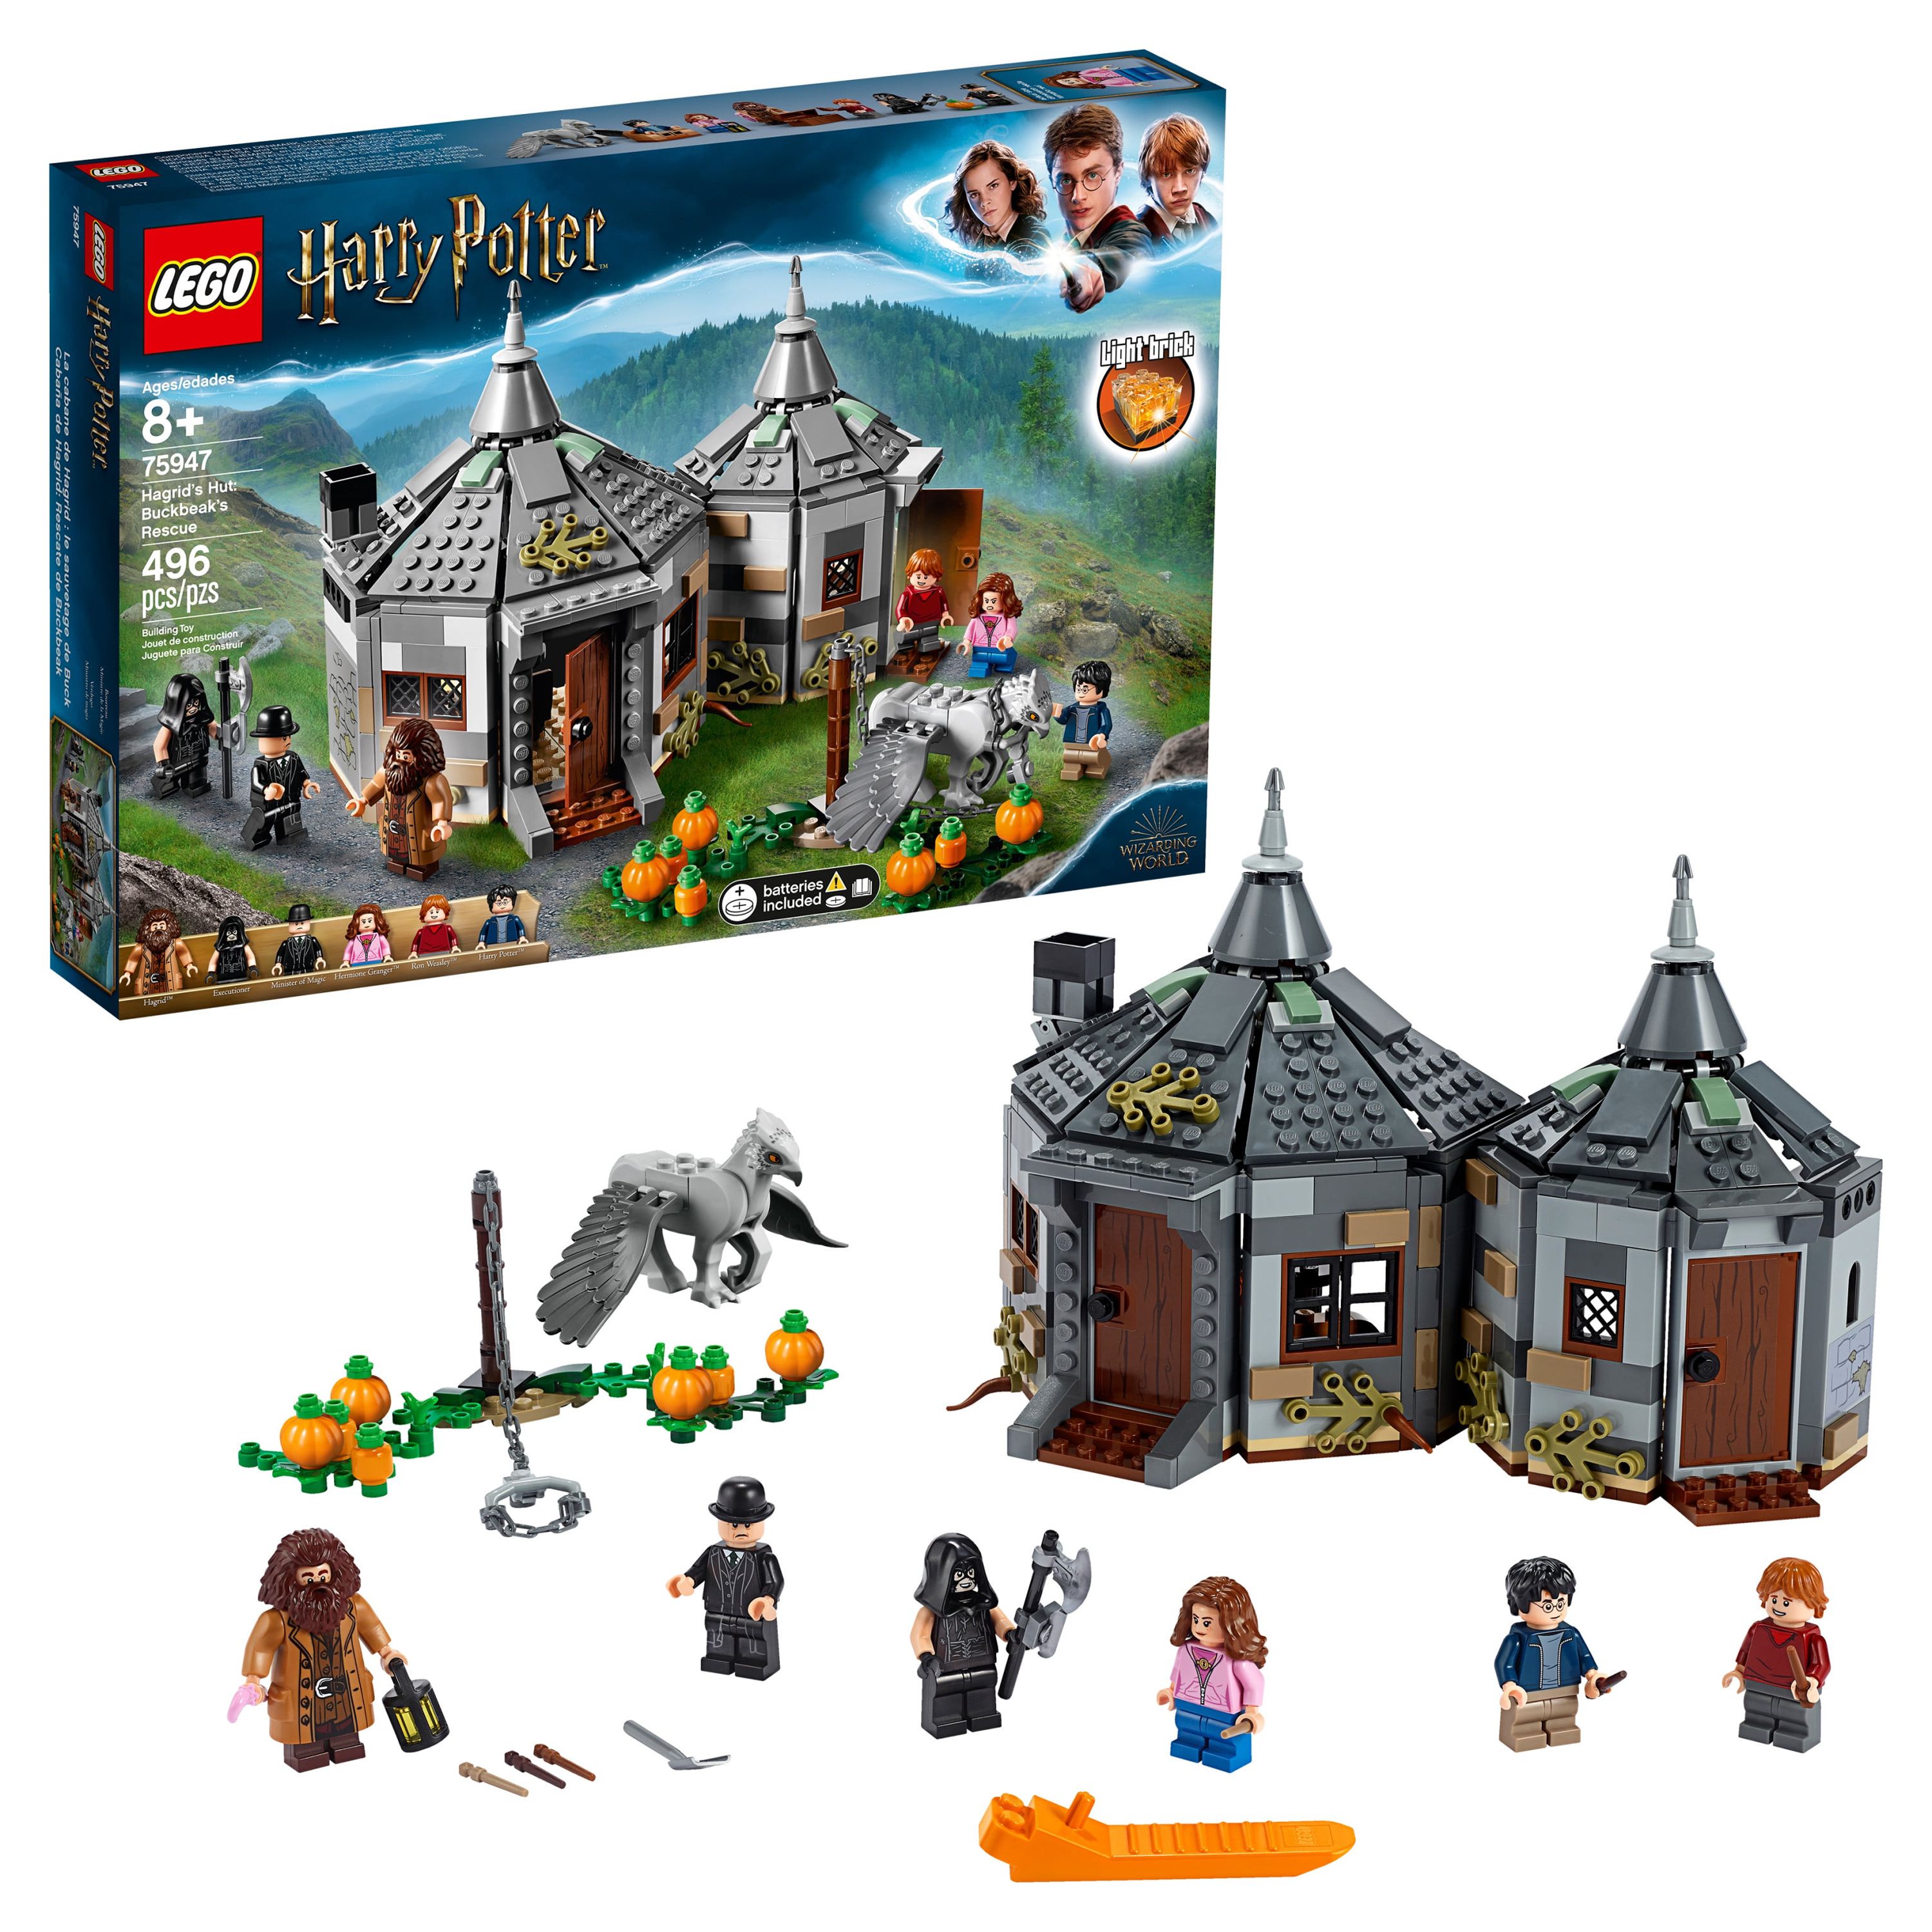 LEGO Harry Potter Hagrid's Hut: Buckbeak's Rescue 75947 Building Set (496 Pieces) - image 1 of 6